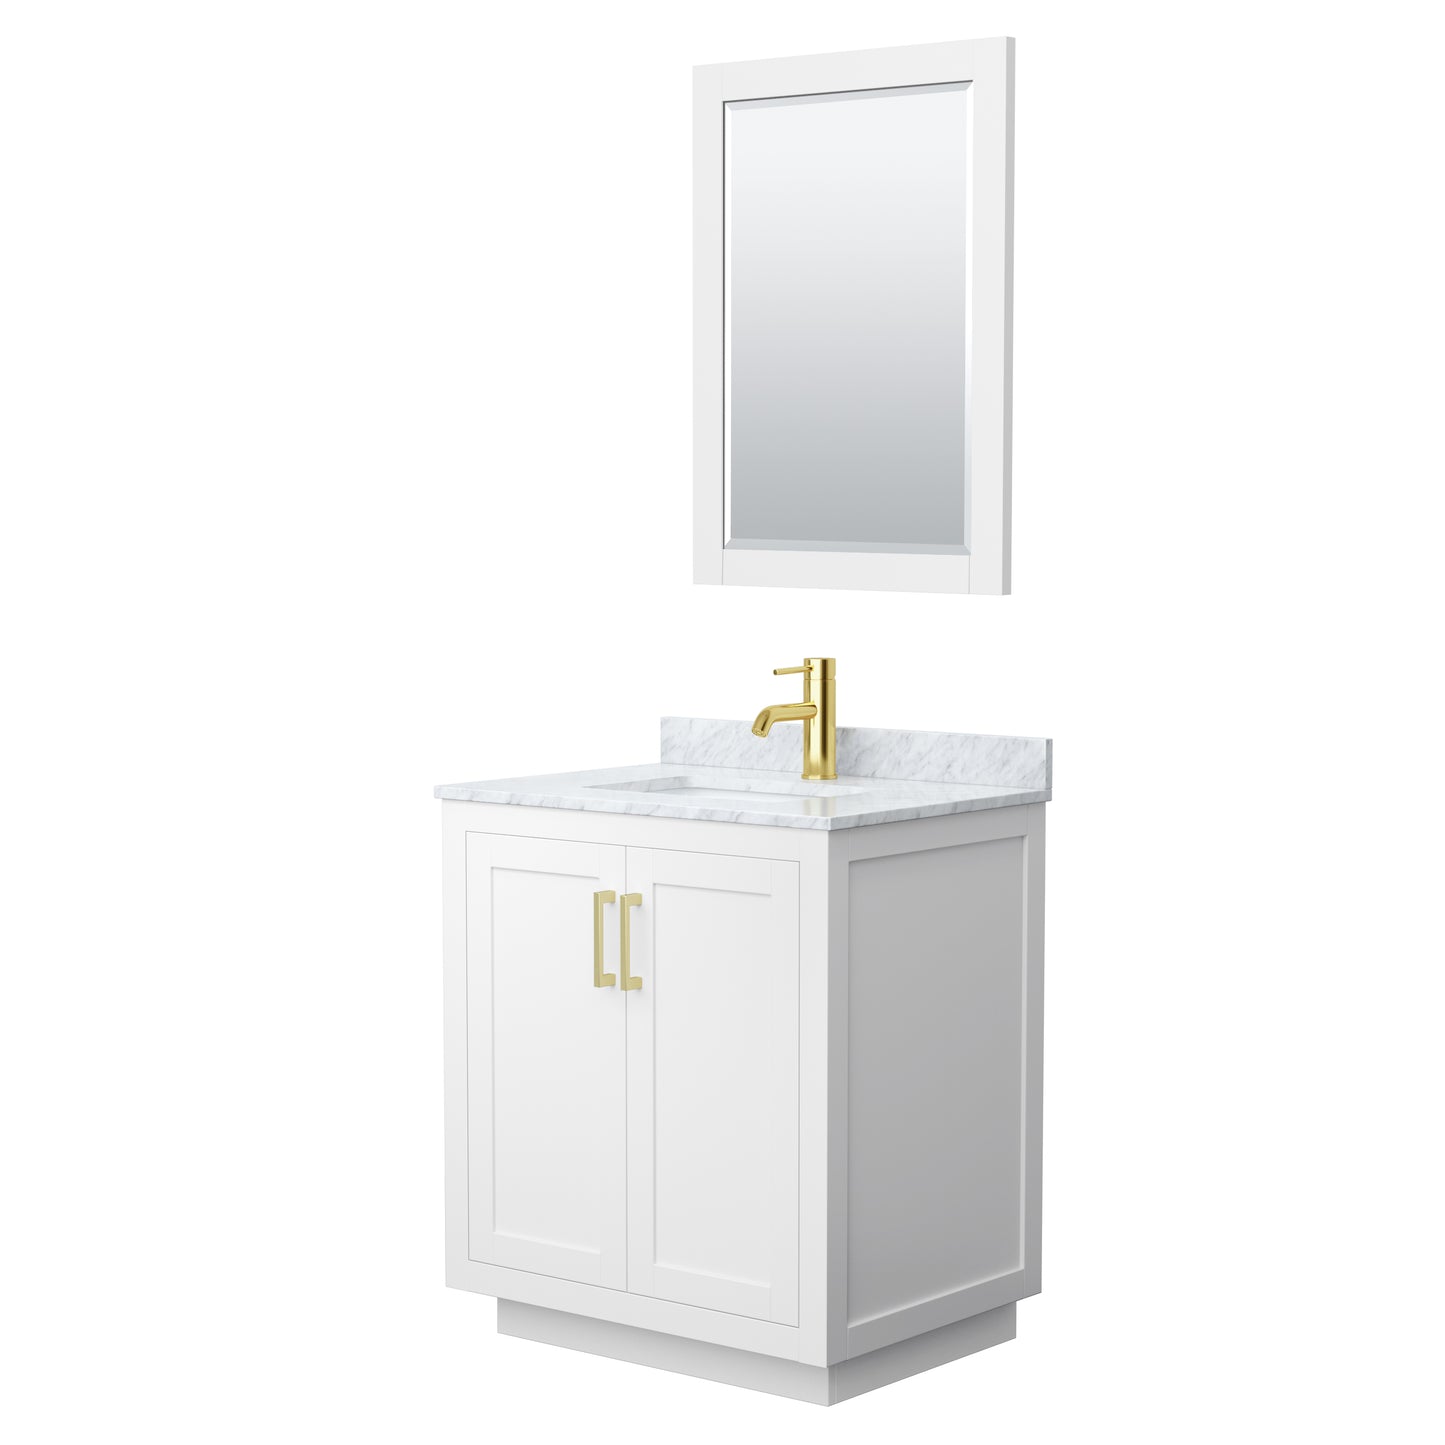 Wyndham Miranda 30 Inch Single Bathroom Vanity in White Carrara Marble Countertop with Undermount Square Sink and Trim - Luxe Bathroom Vanities